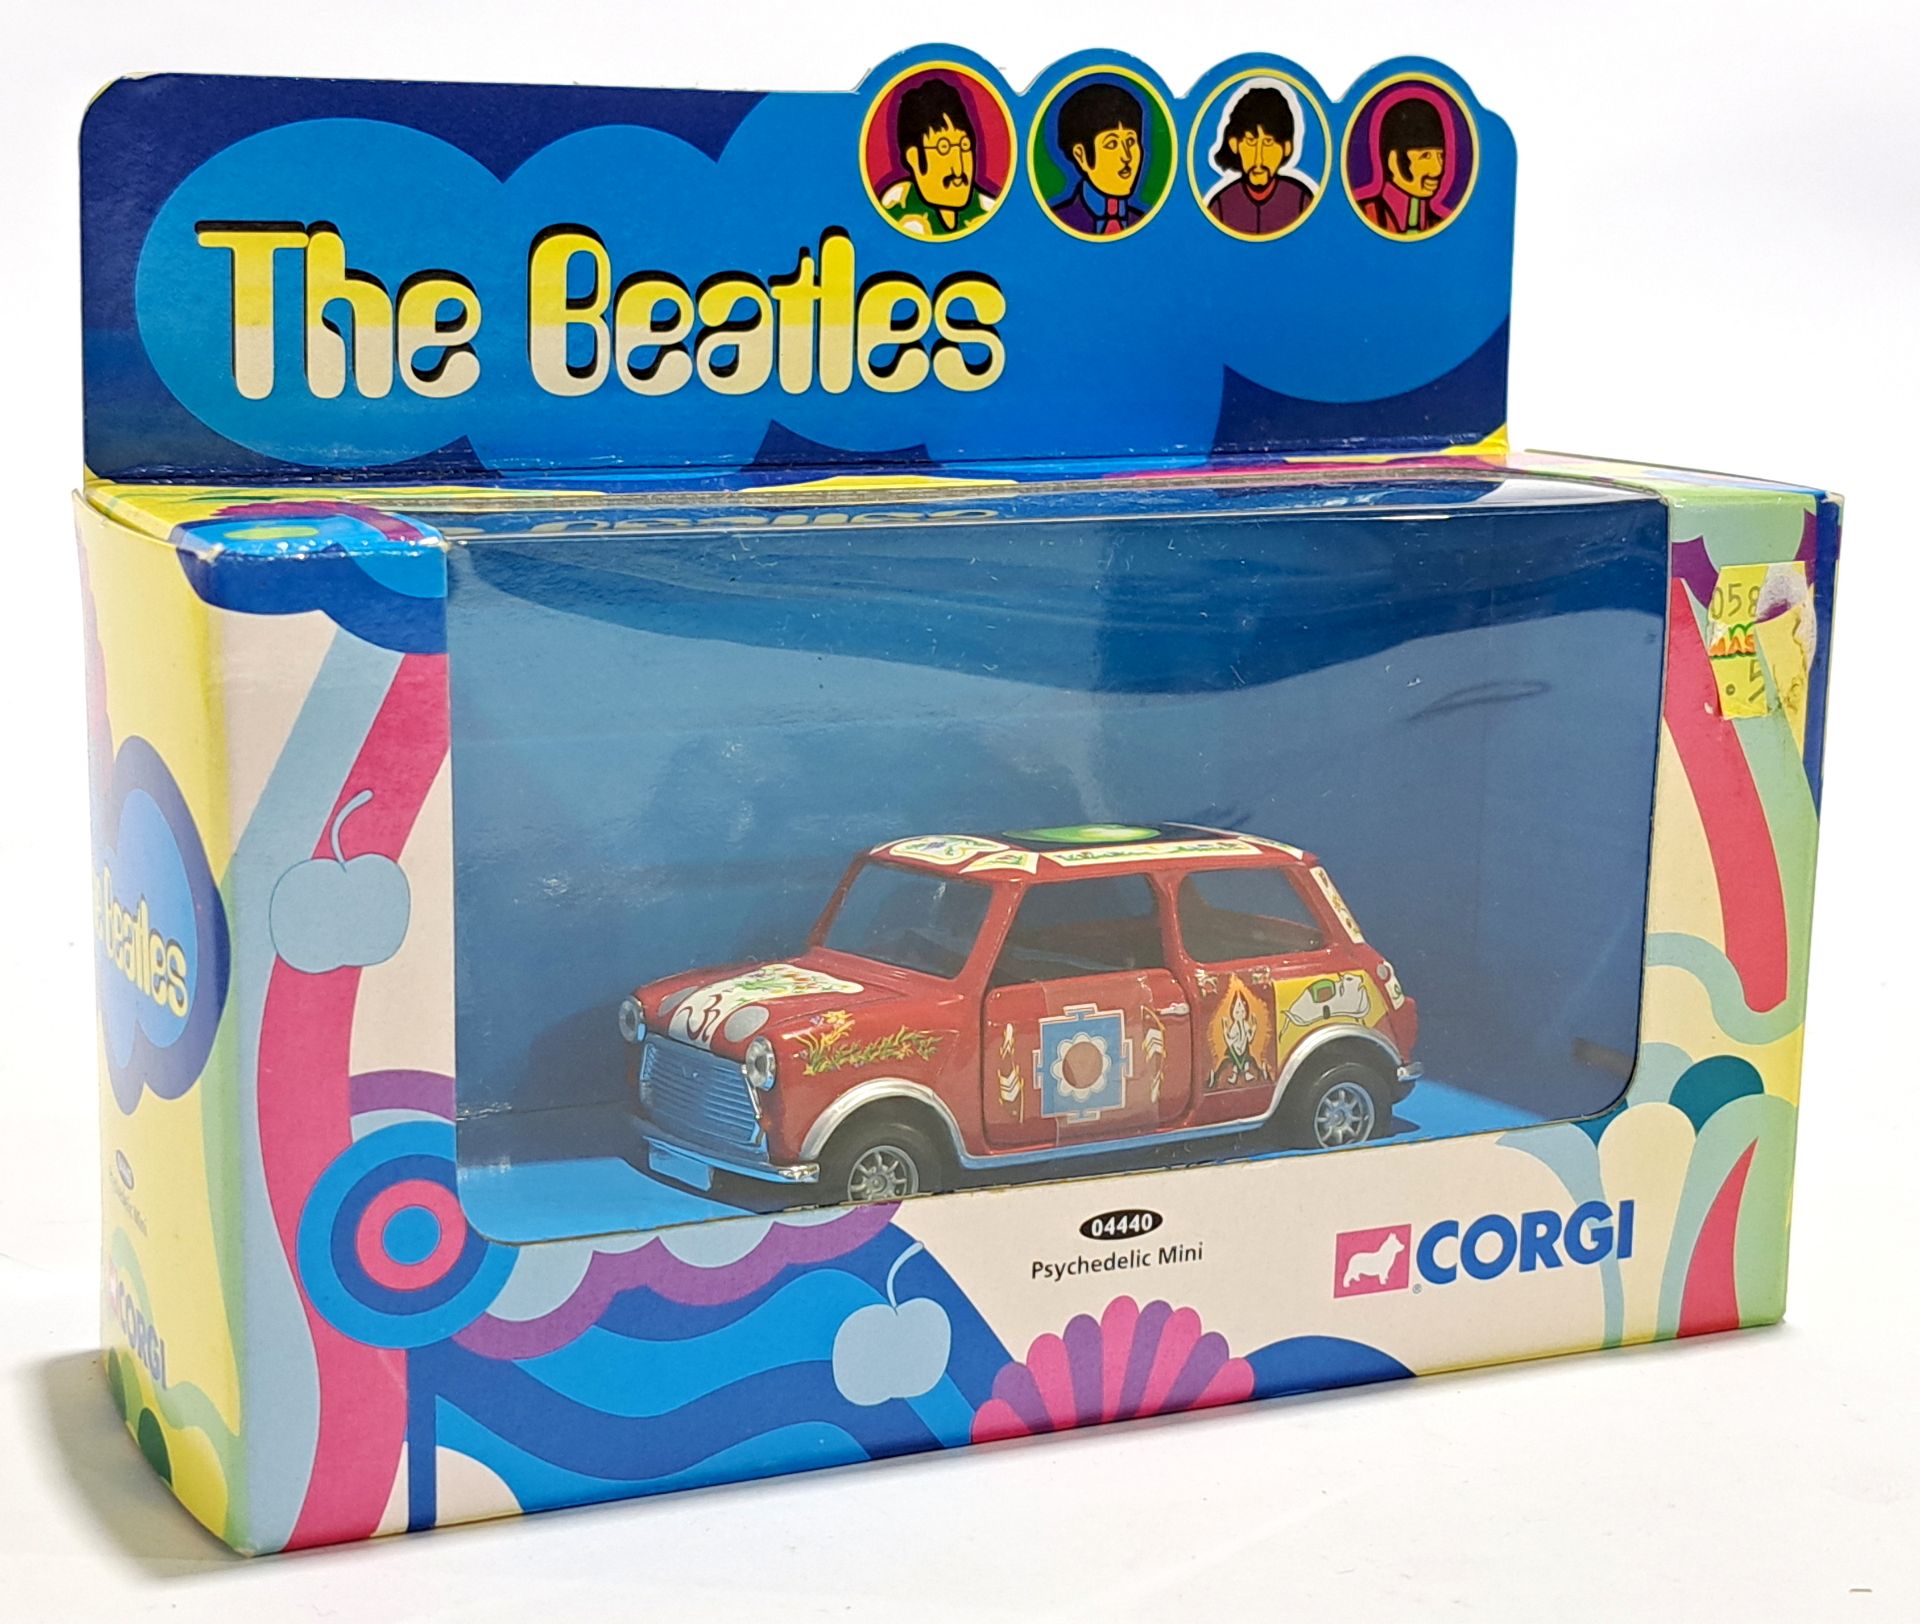 Corgi 04440 "The Beatles" Psychedelic Mini